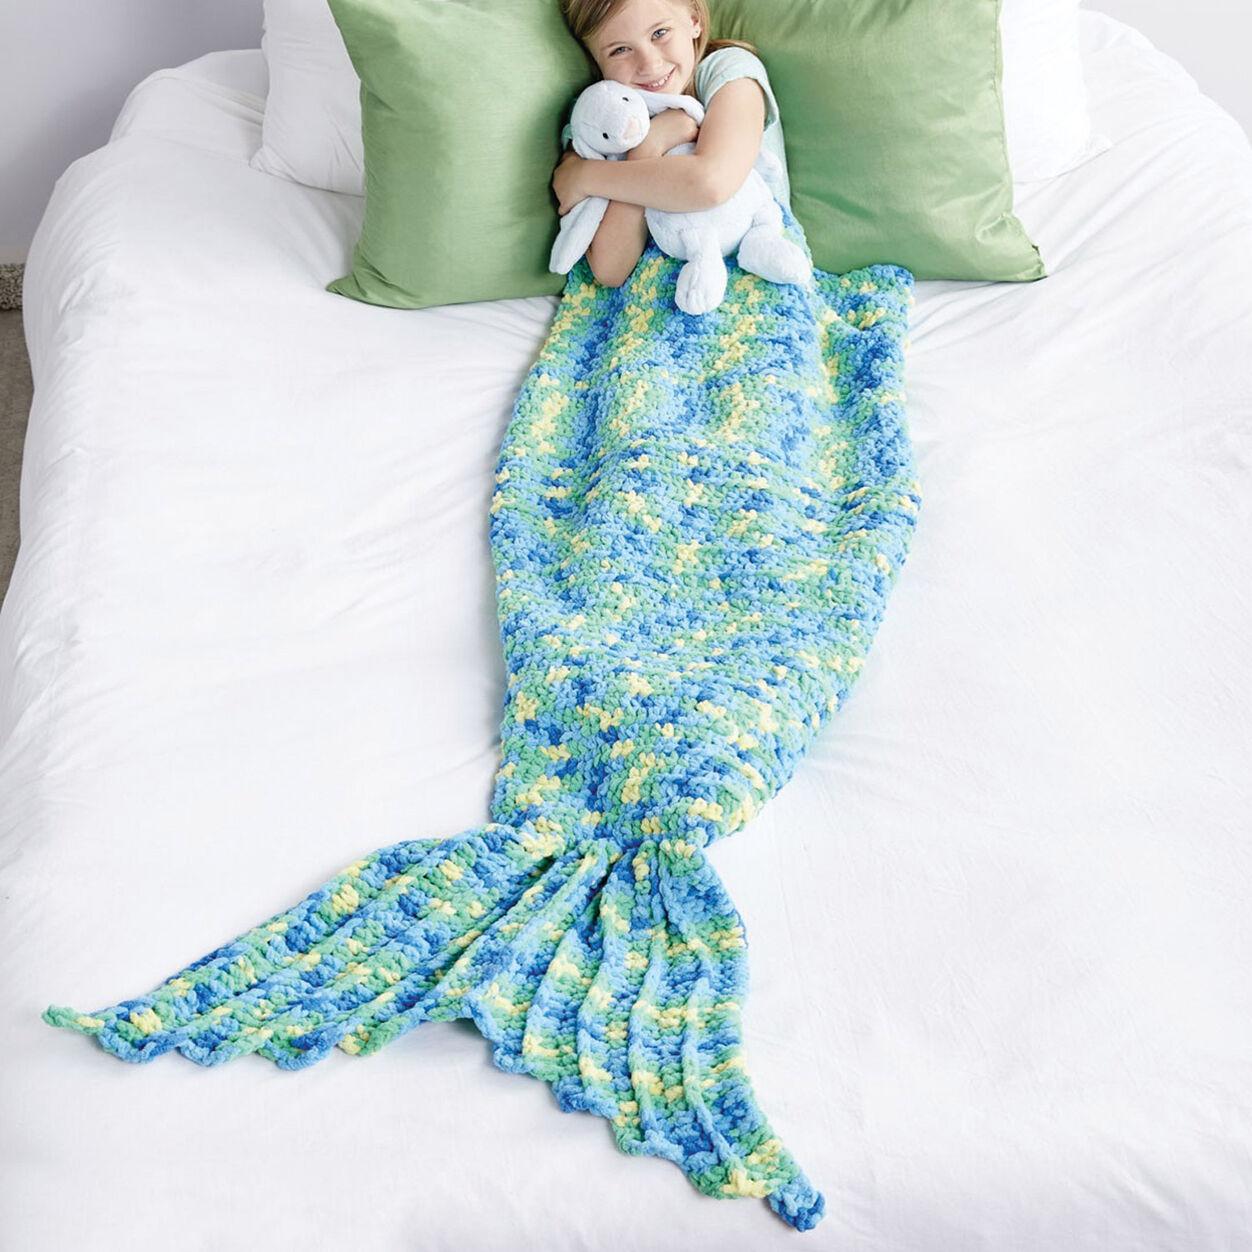 Disney Little Mermaid Bedding